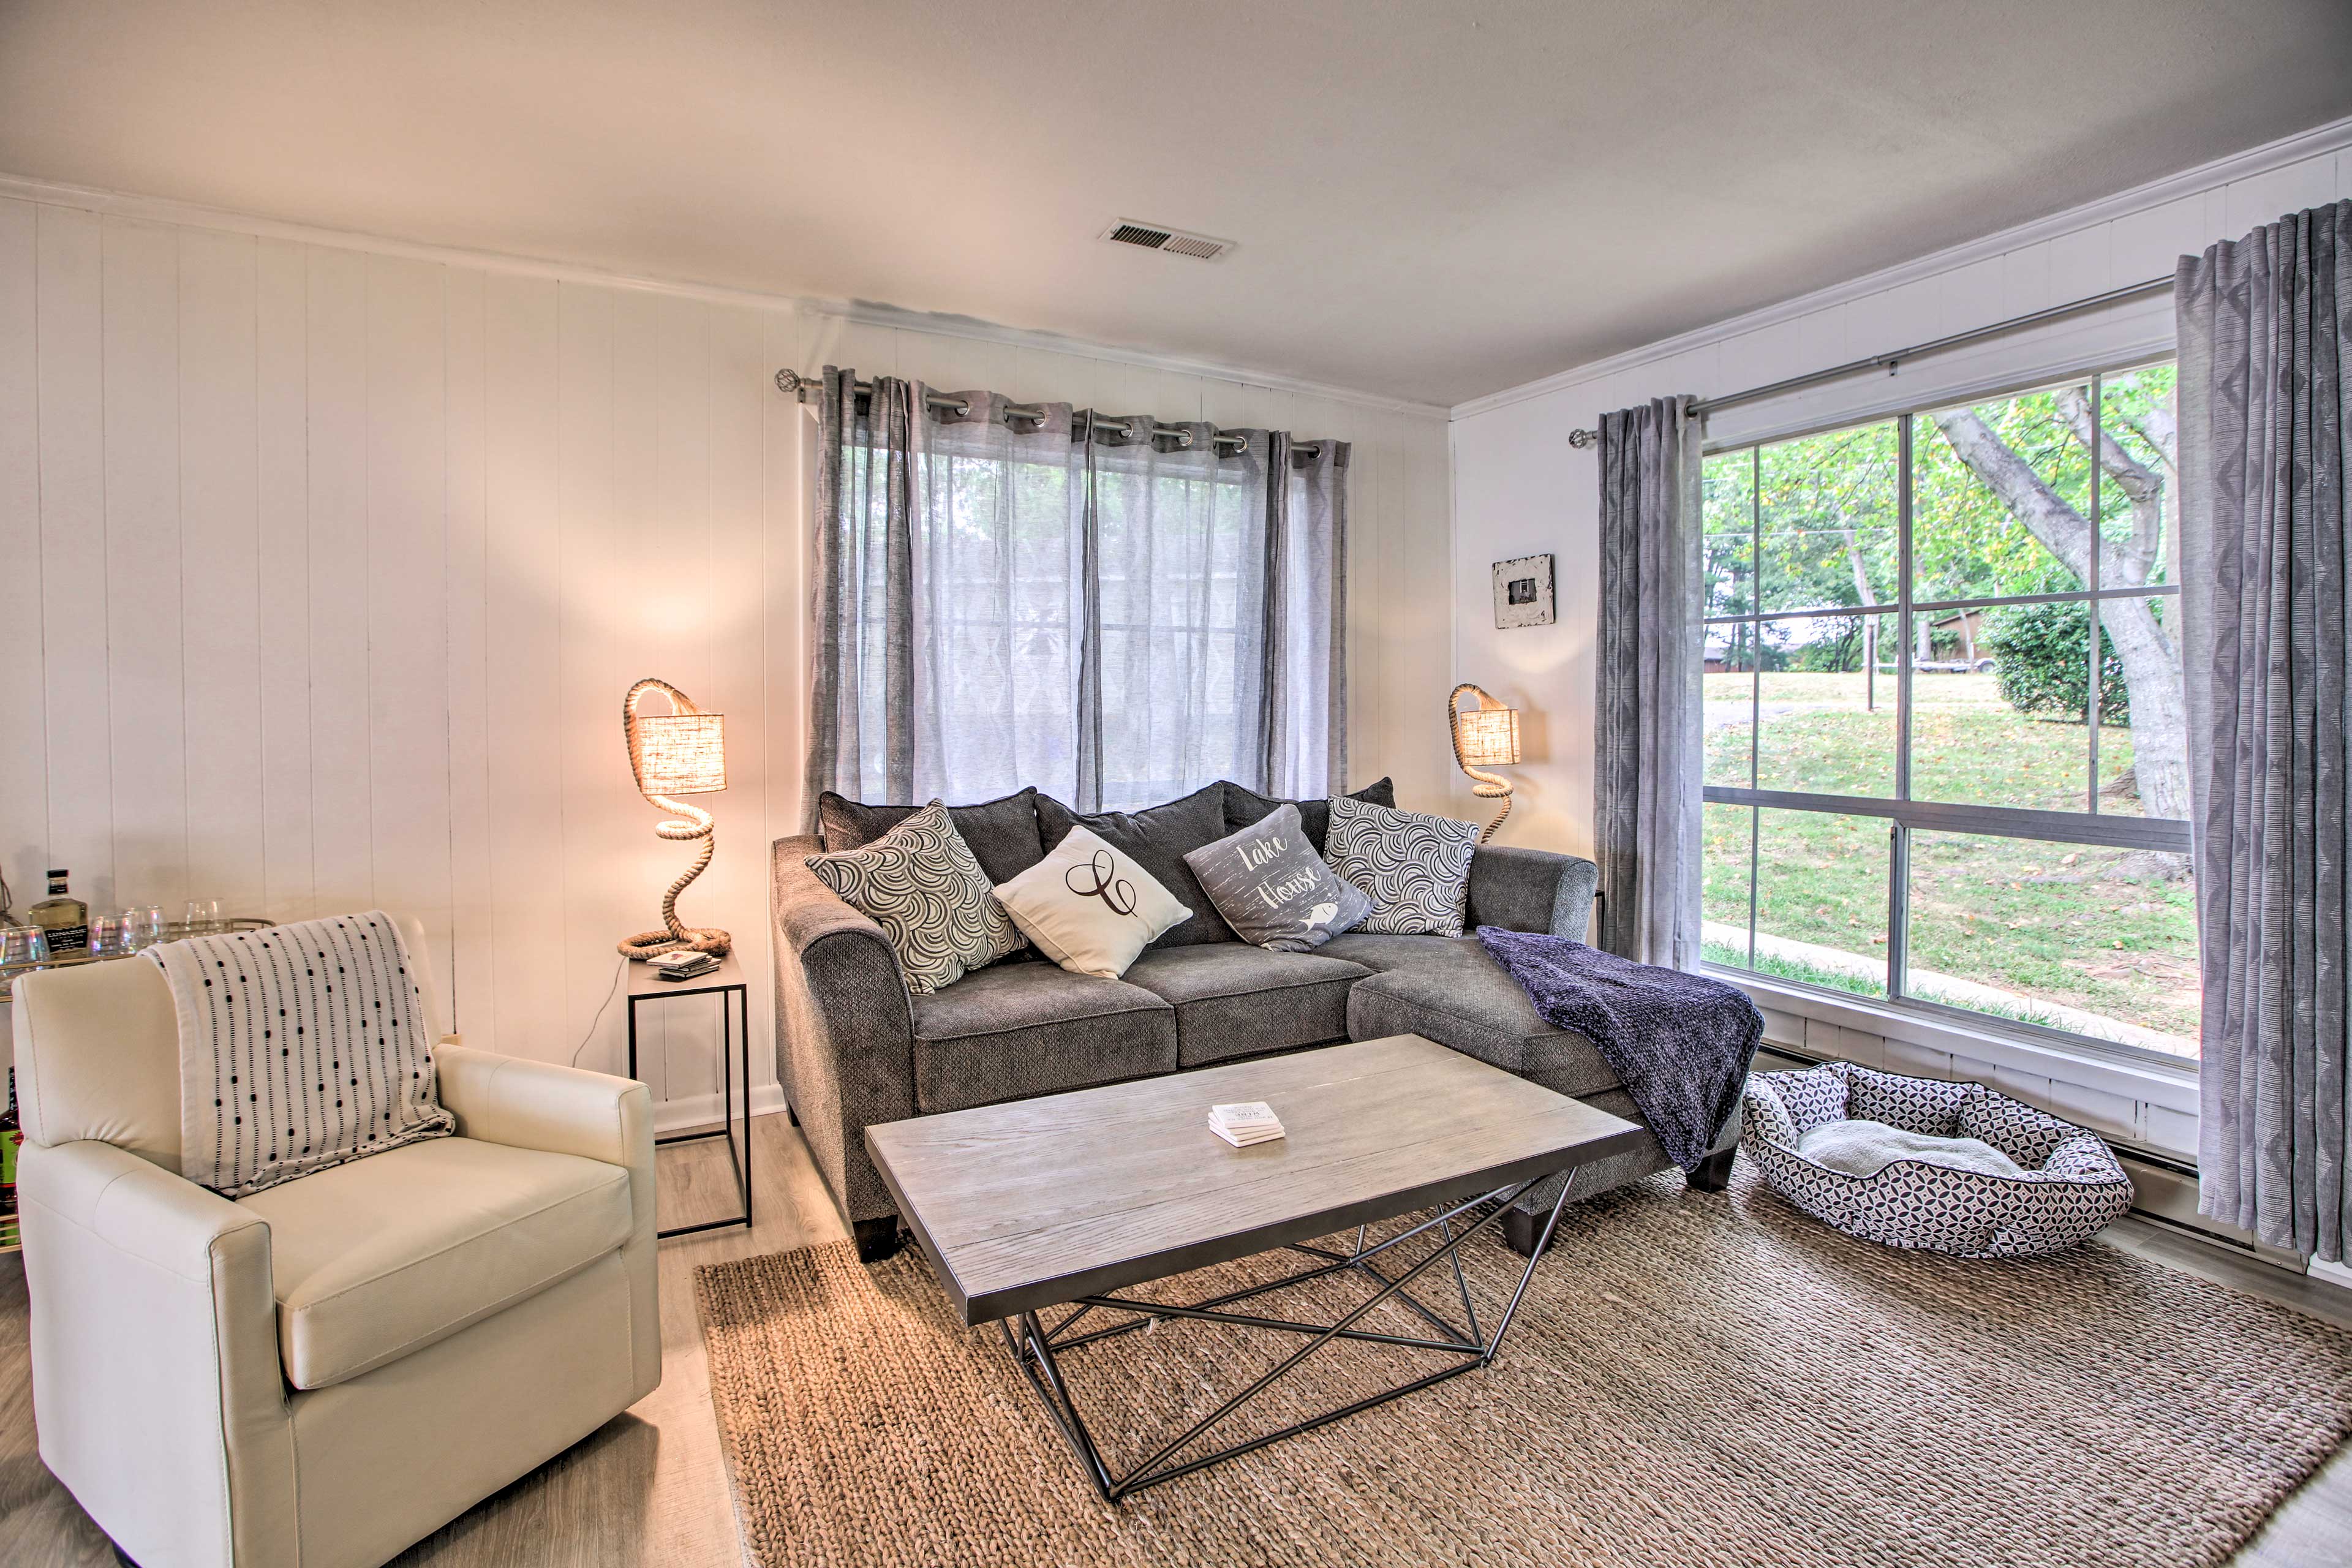 Contemporary furnishings create a comfortable interior.